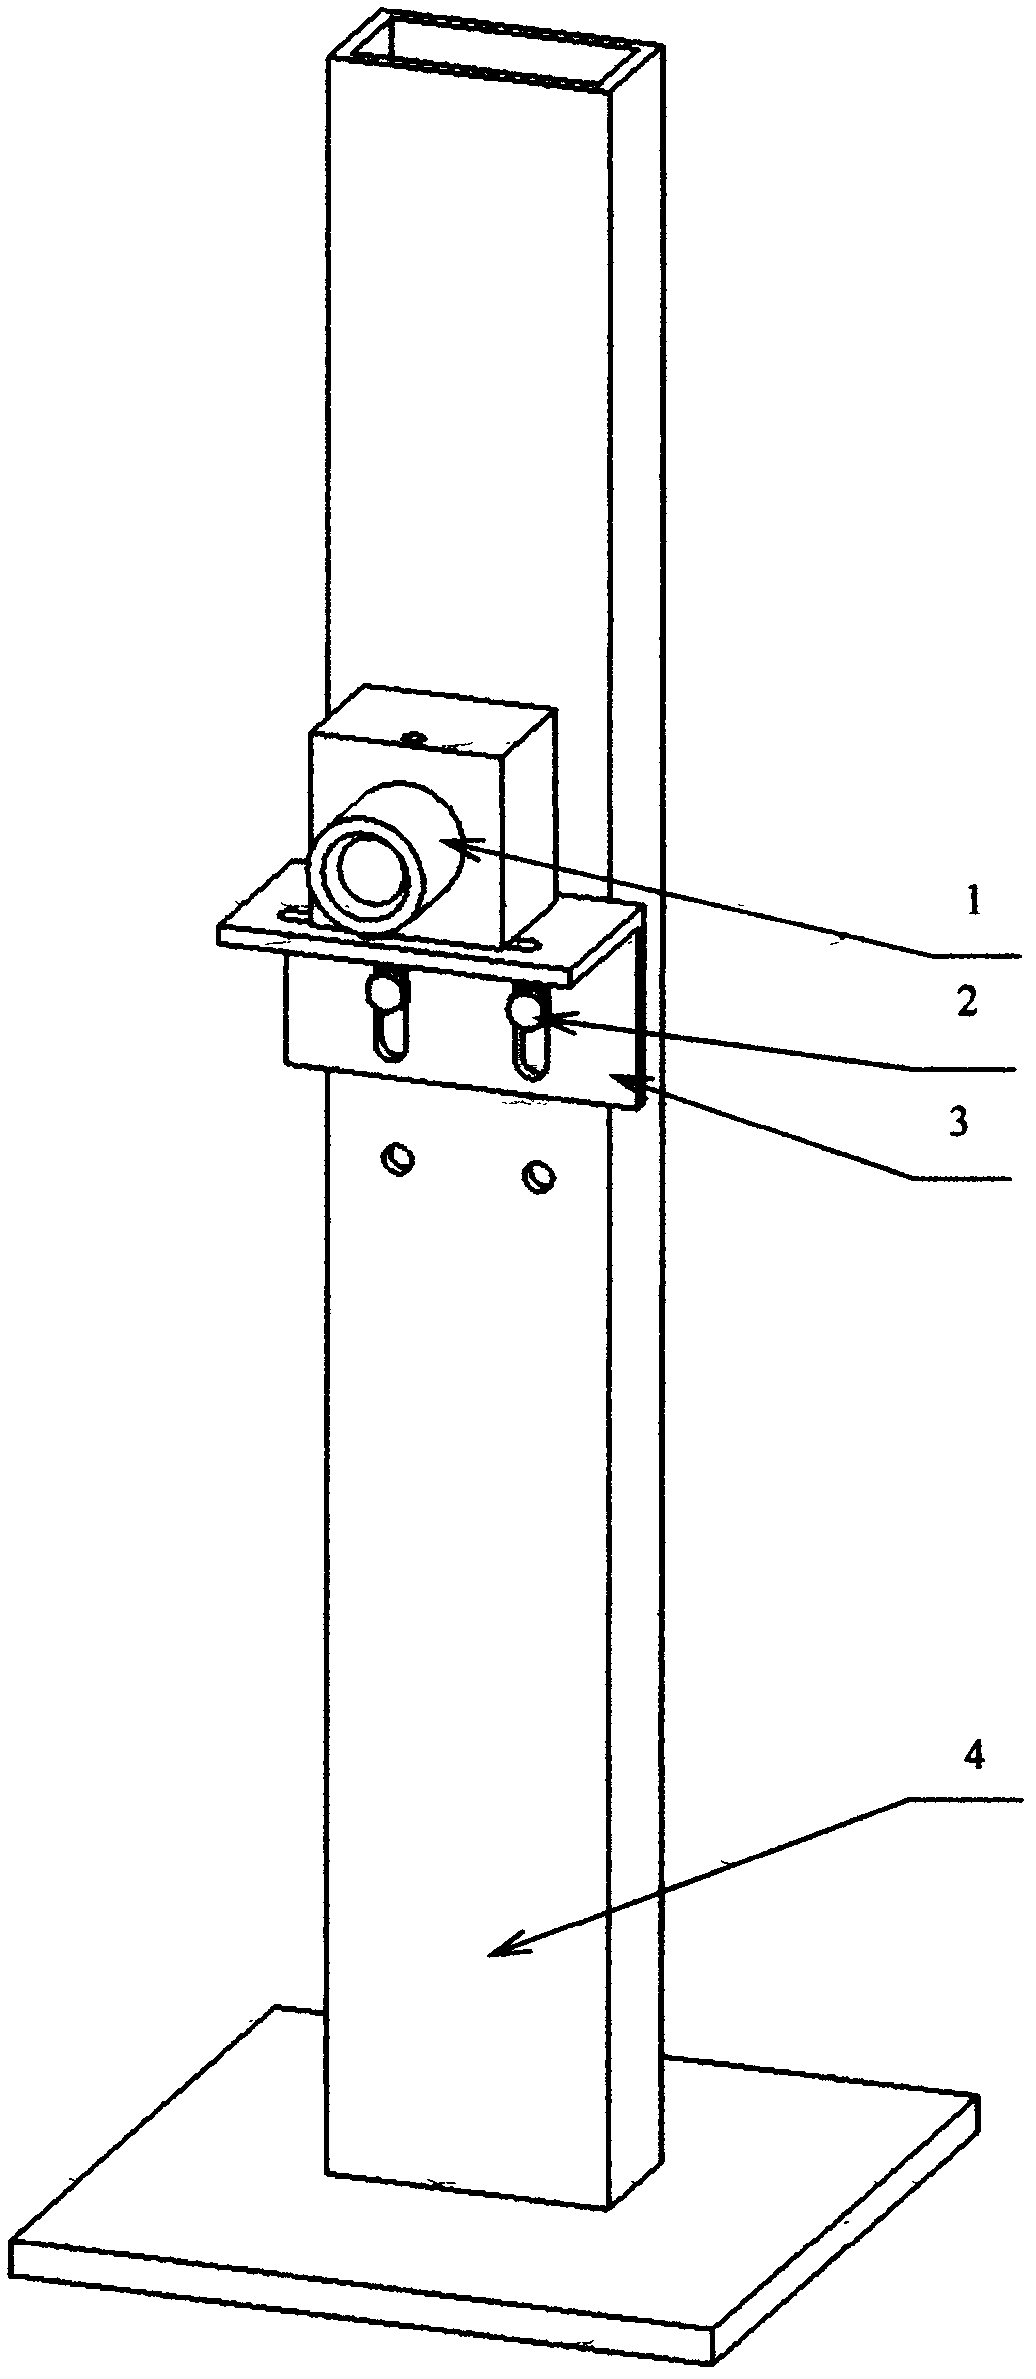 Position-adjustable camera assembly system